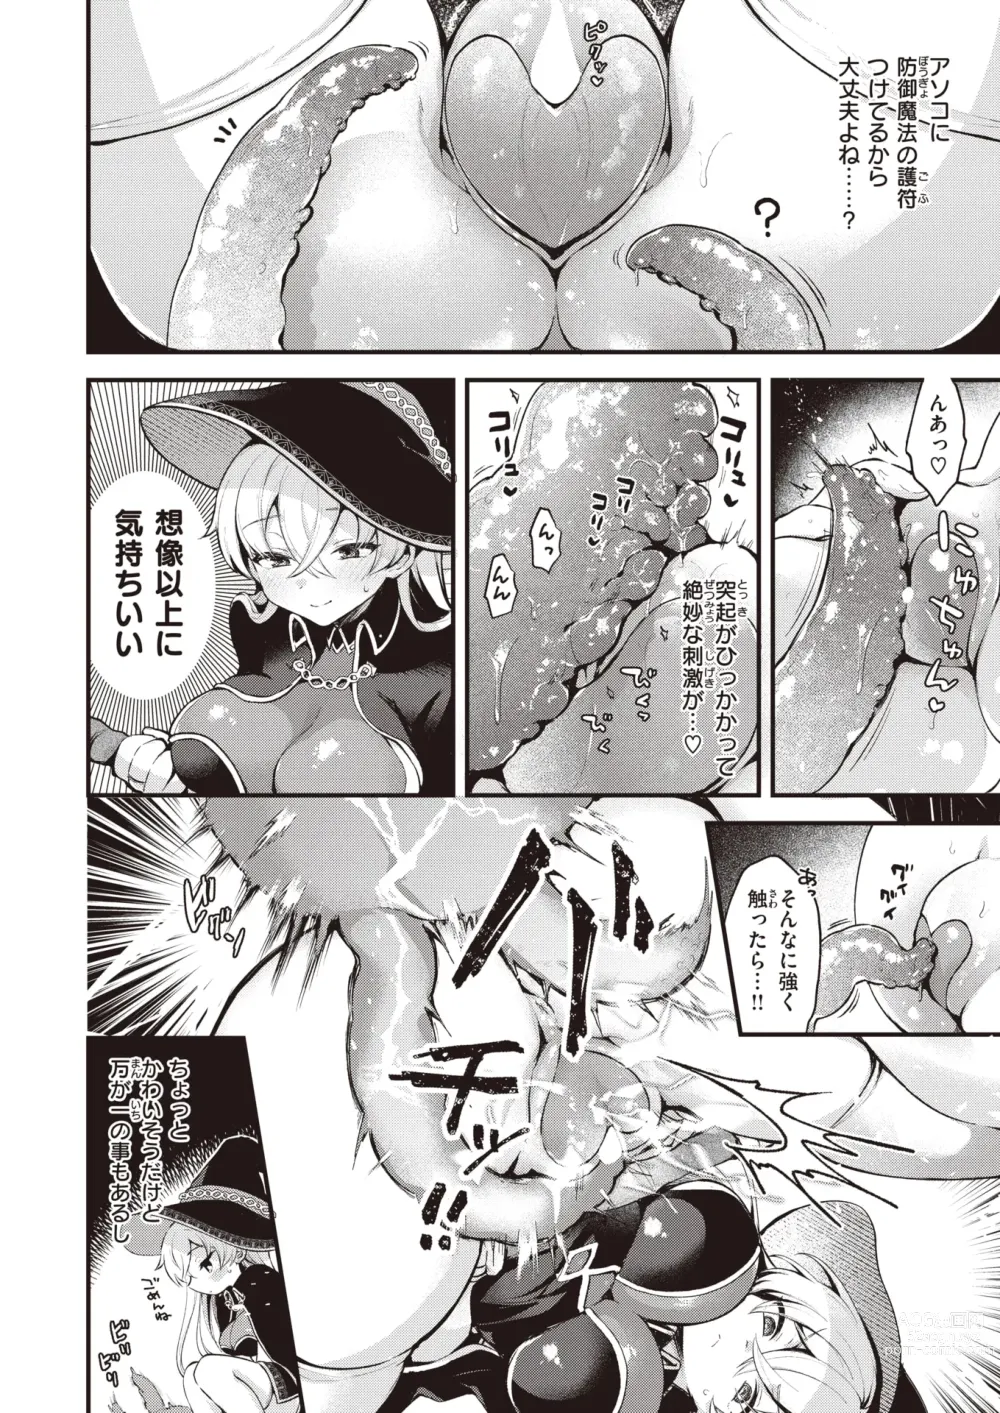 Page 9 of manga Isekai Rakuten Vol. 25